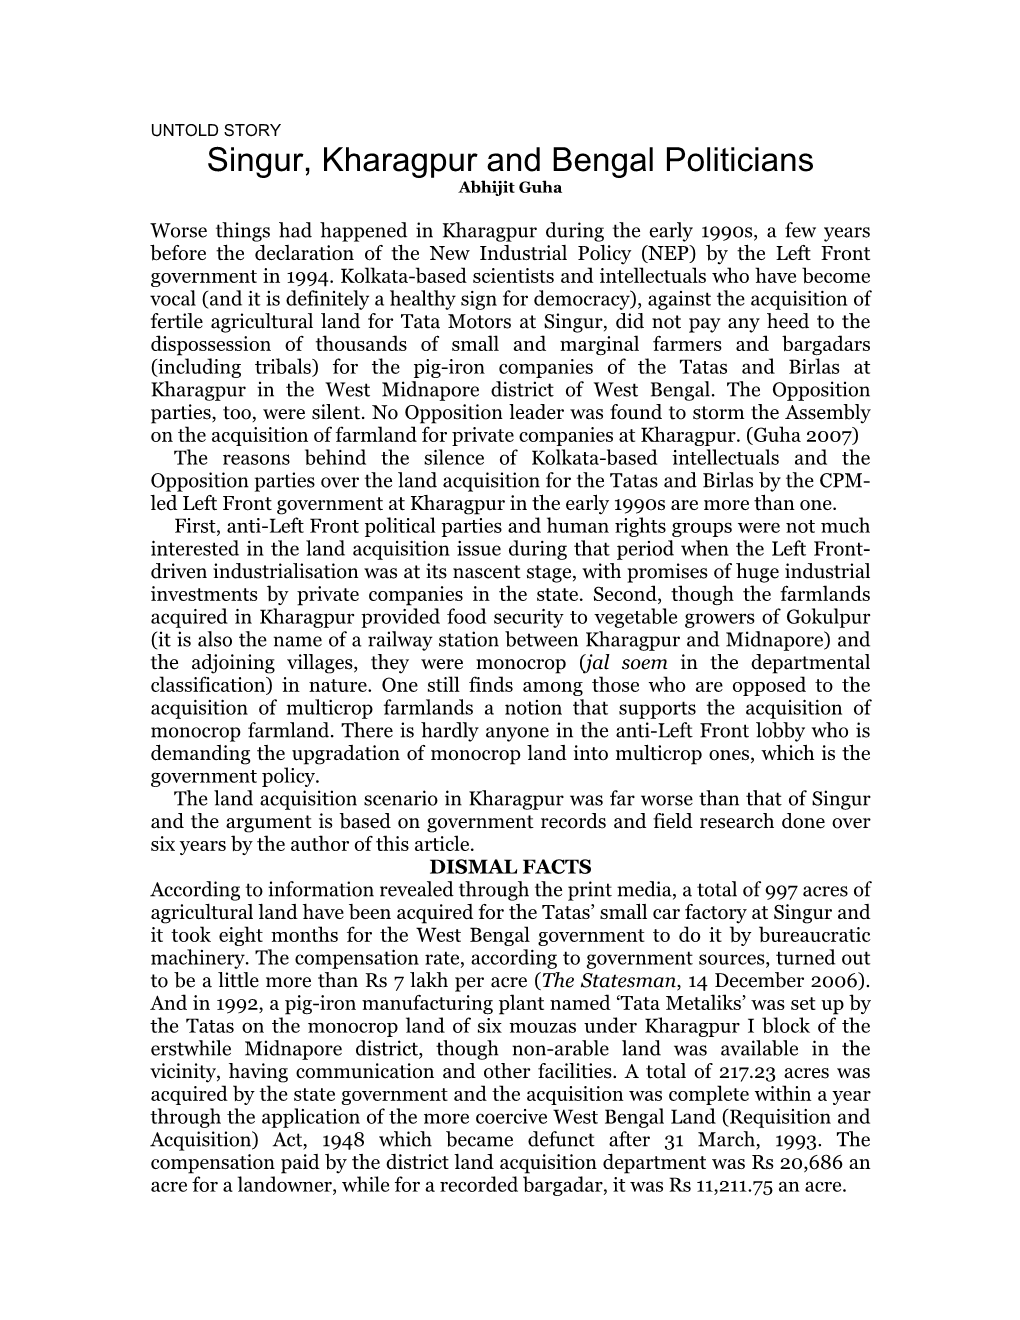 Singur, Kharagpur and Bengal Politicians Abhijit Guha